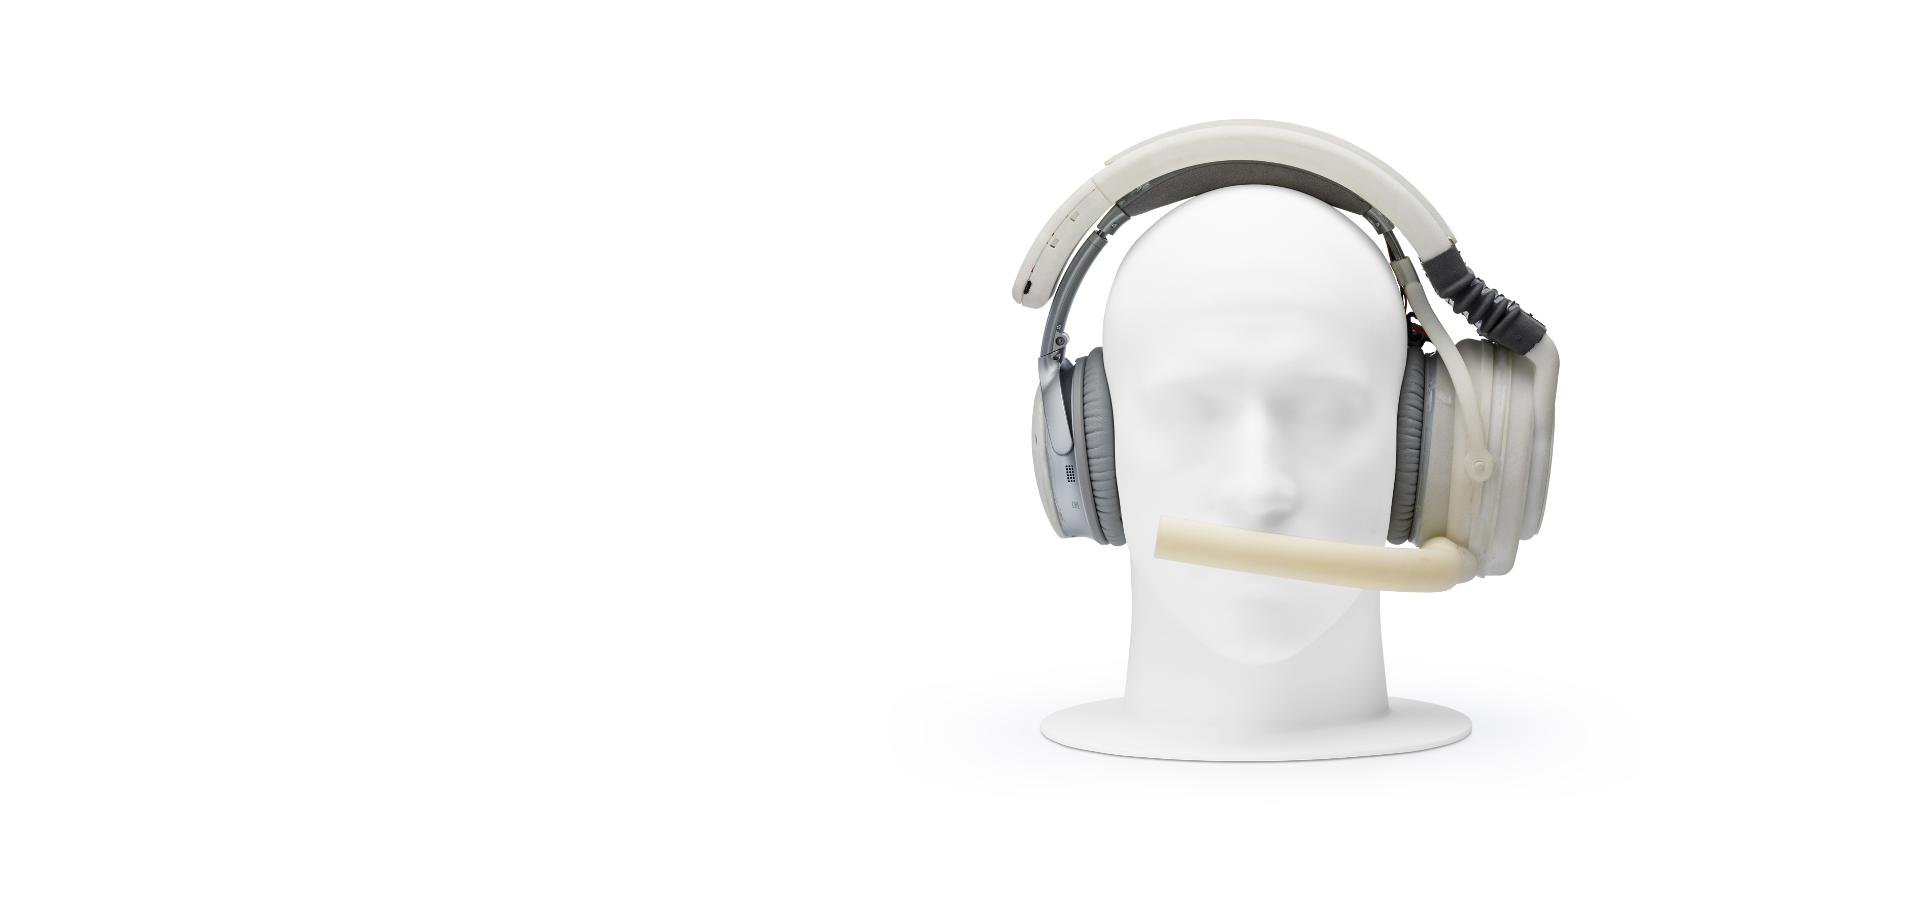 Mannequin head wearing prototype headphones, with mouthpiece